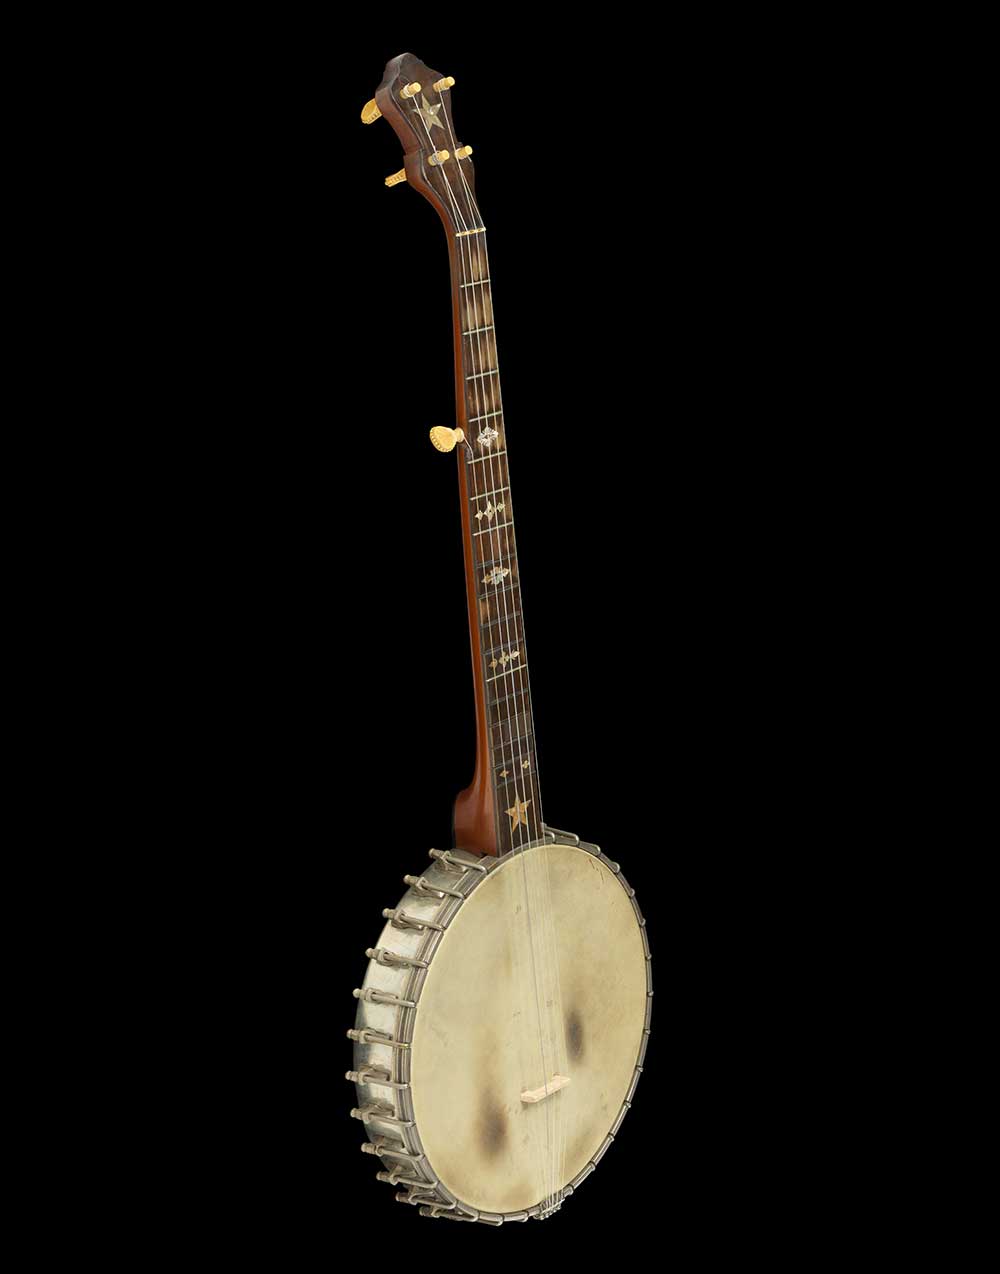 Banjo created for Charles P. Stinson, by John H. Buckbee, nineteenth century.